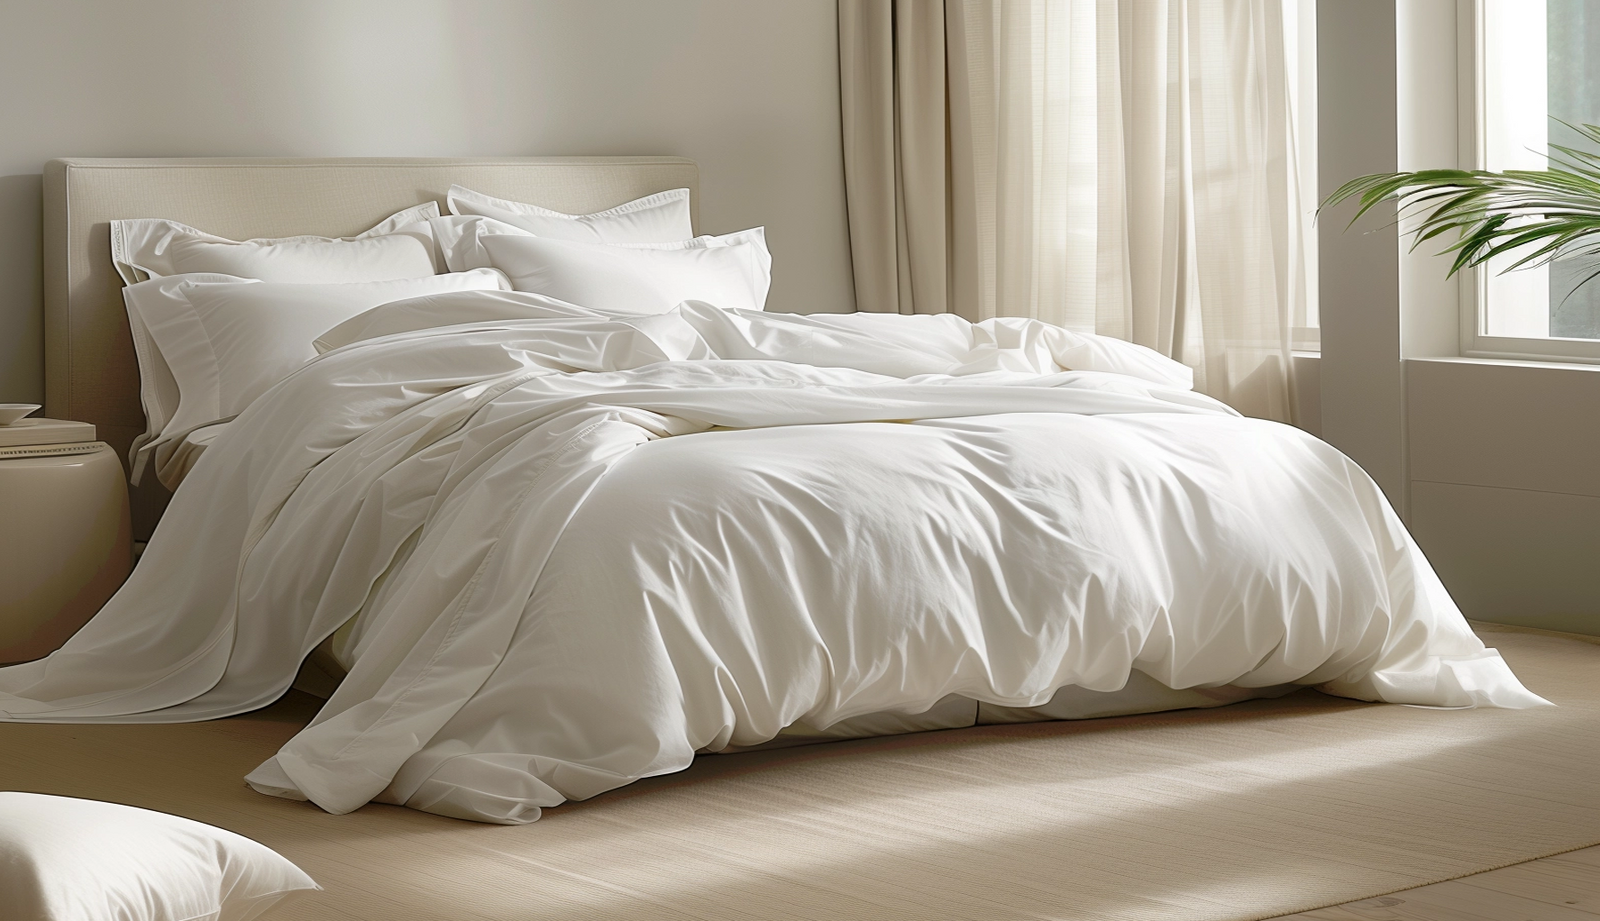 Luxury white bedding in designer bedroom